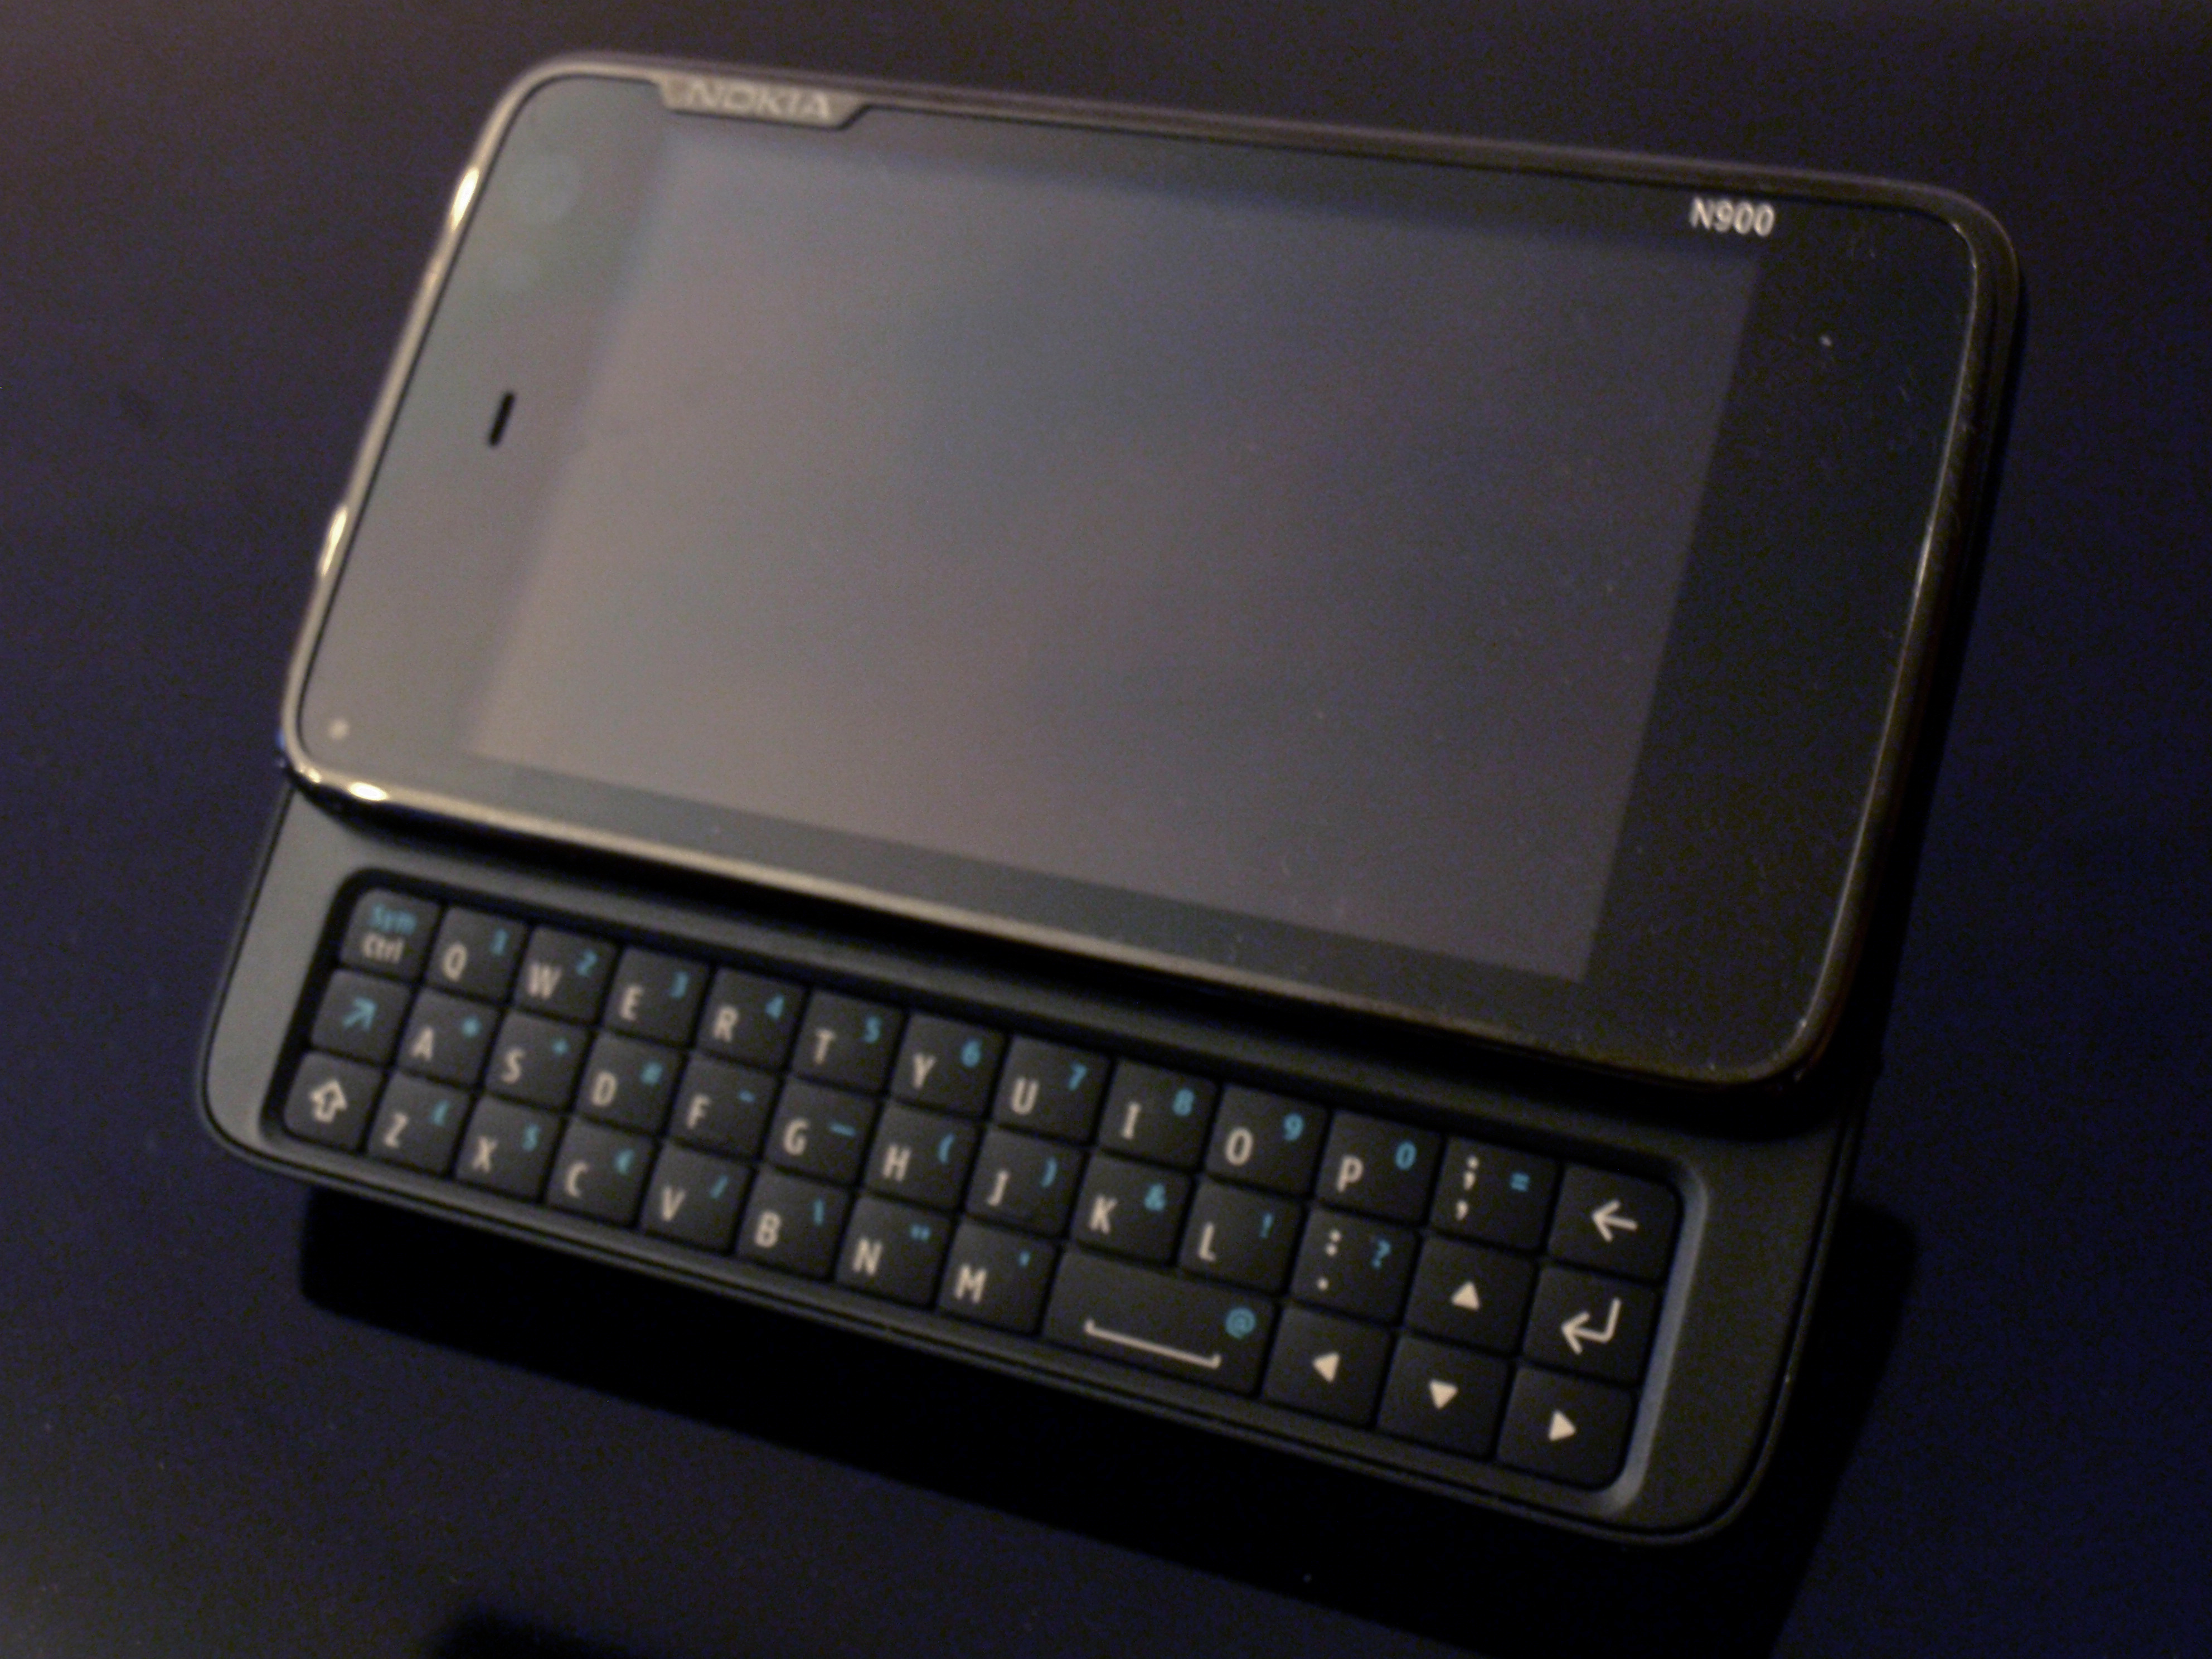 Nokia N900 Wikipedia